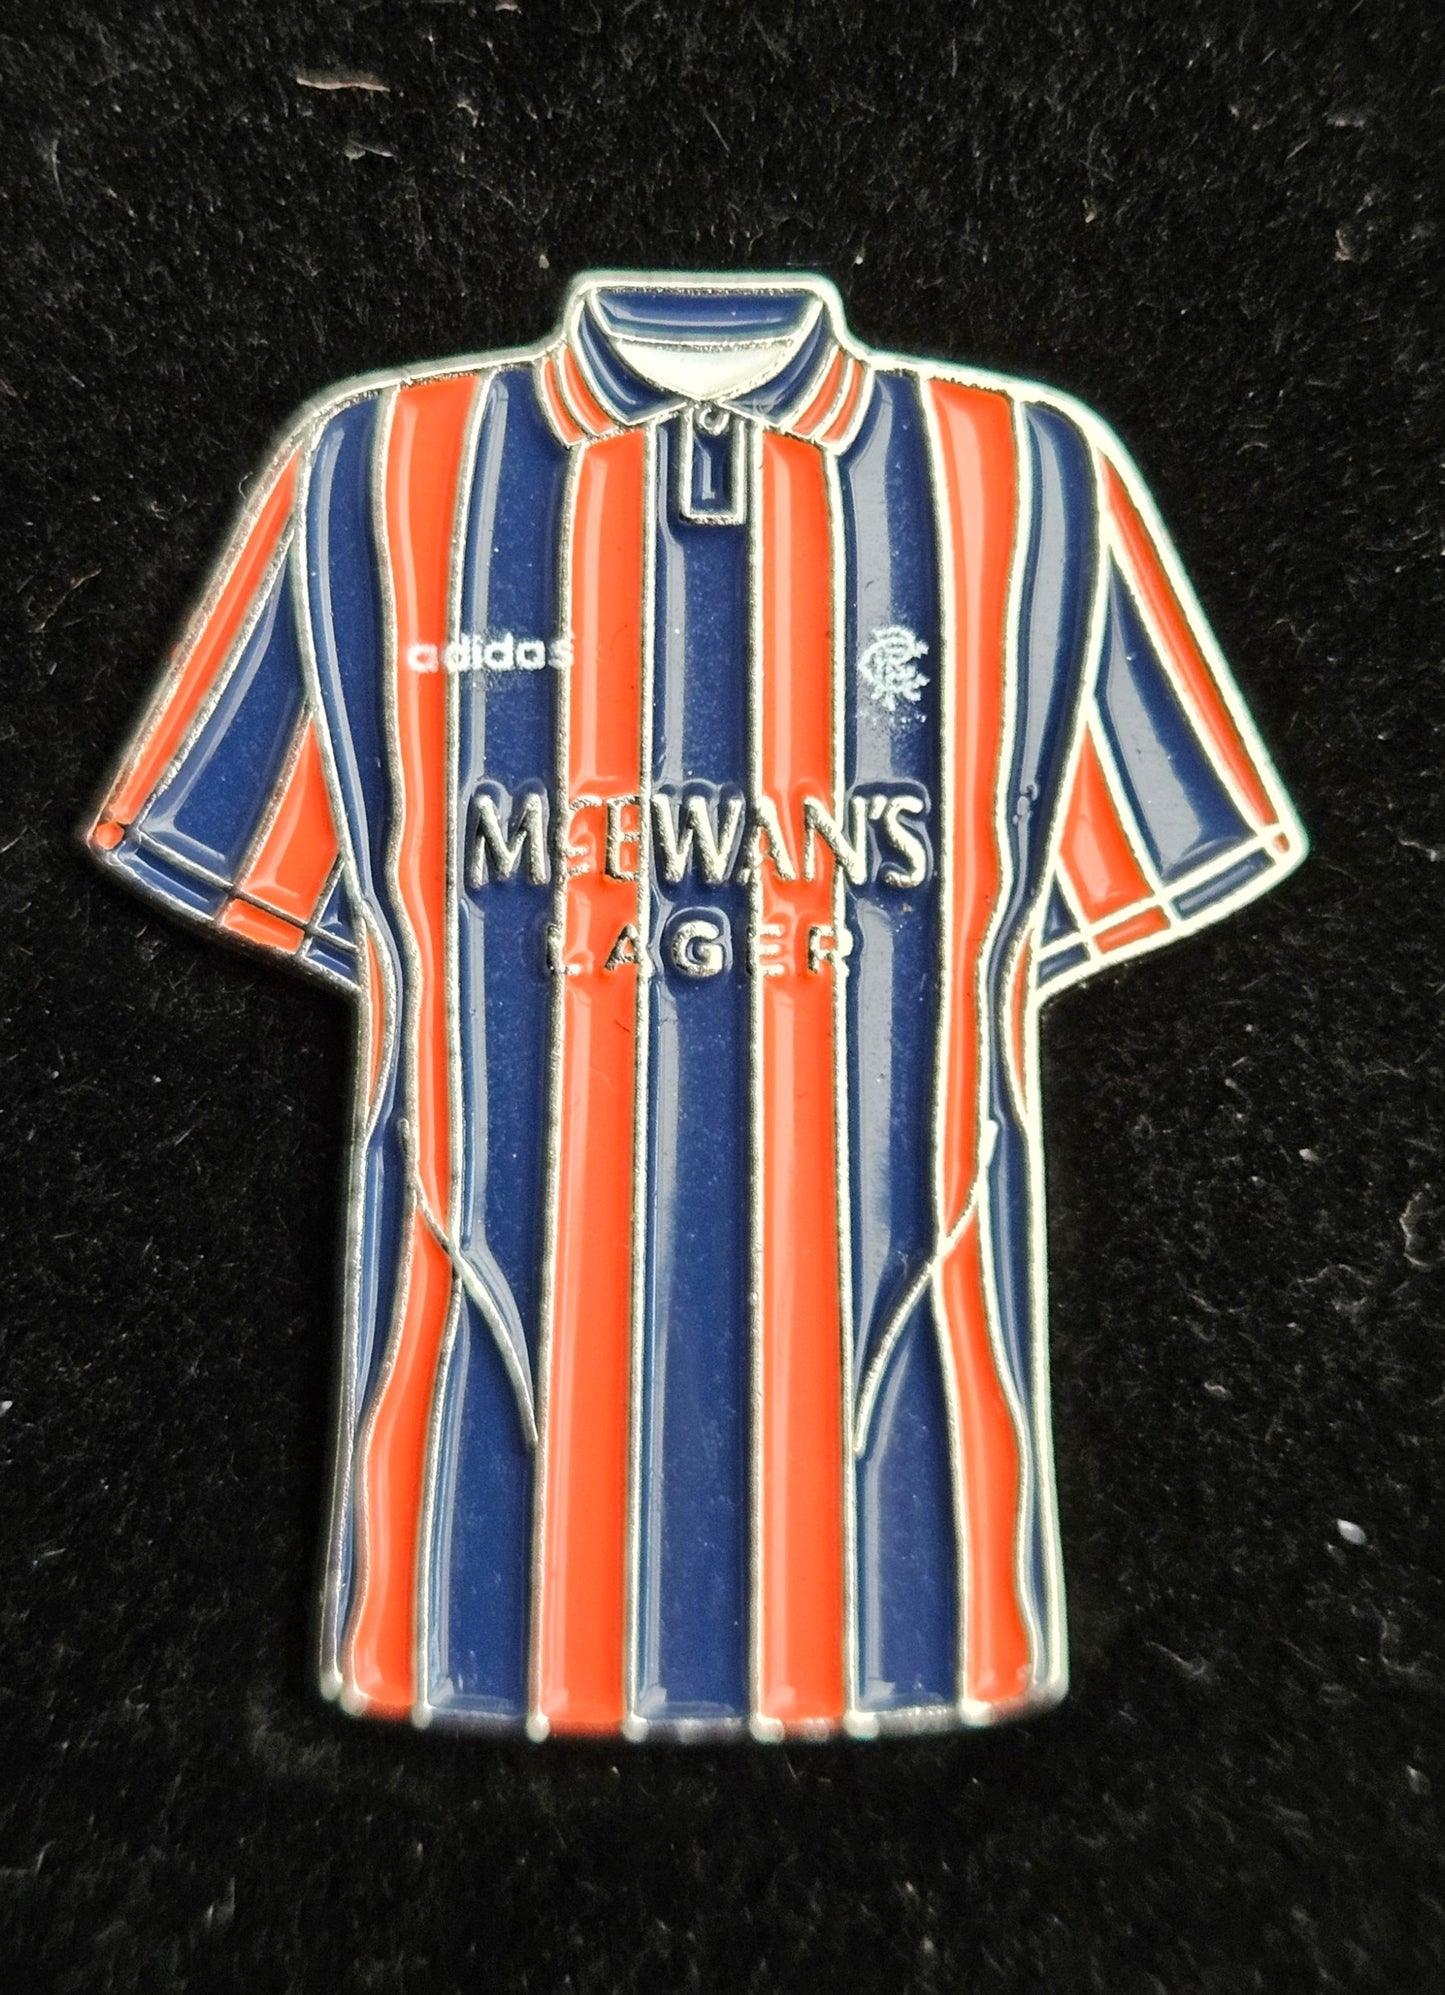 McEwans Lager Rangers Away 1993-94 Shirt Pin